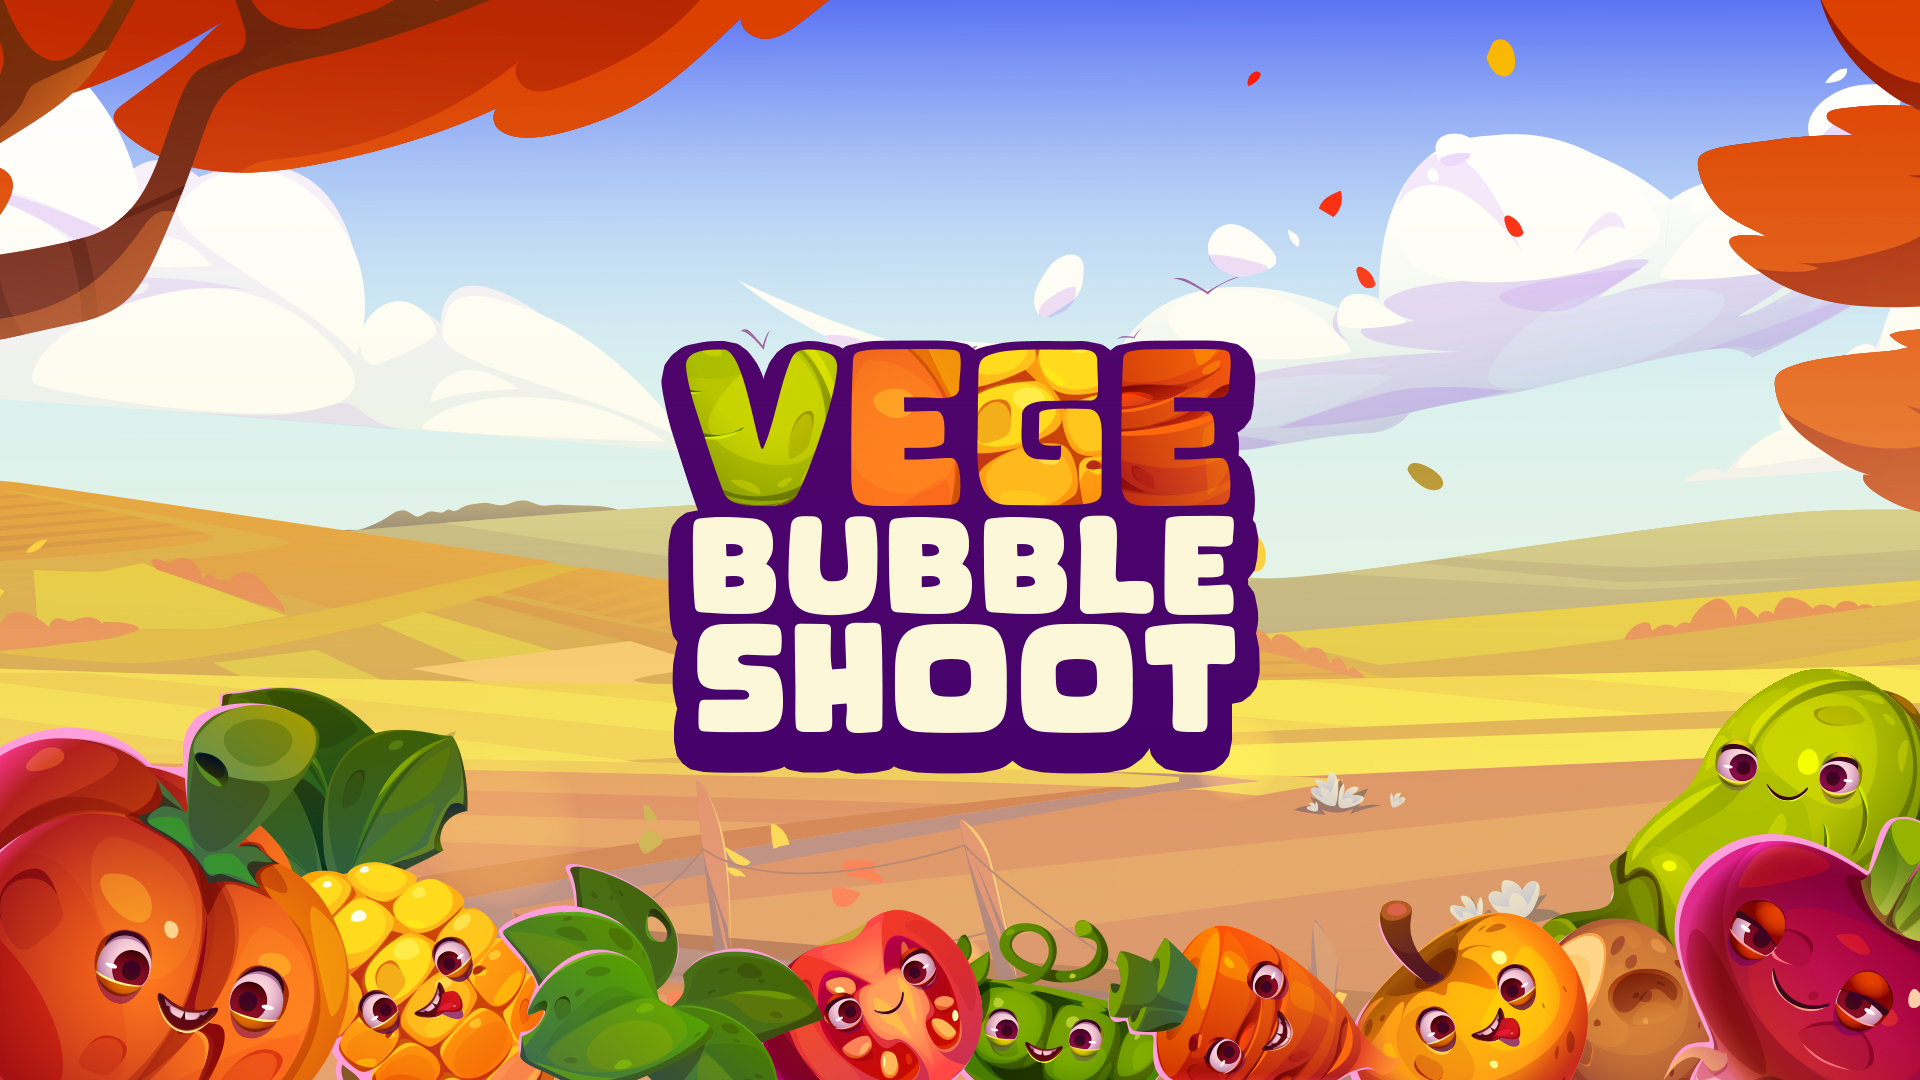 Vege Bubble Shoot